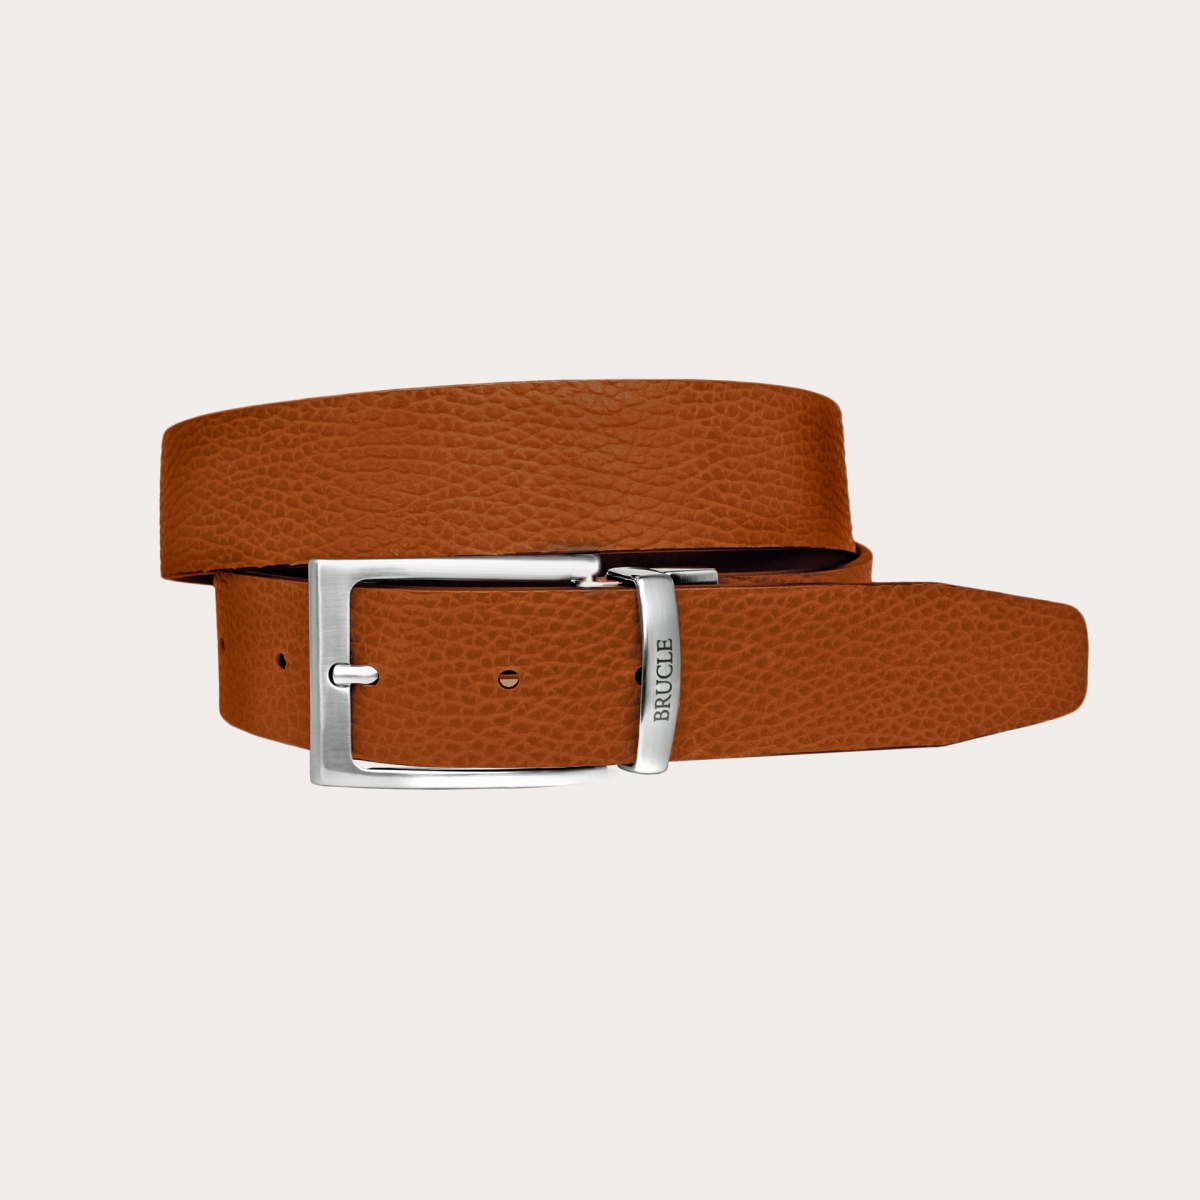 Reversible saffiano leather belt in dark brown and cognac nickel free